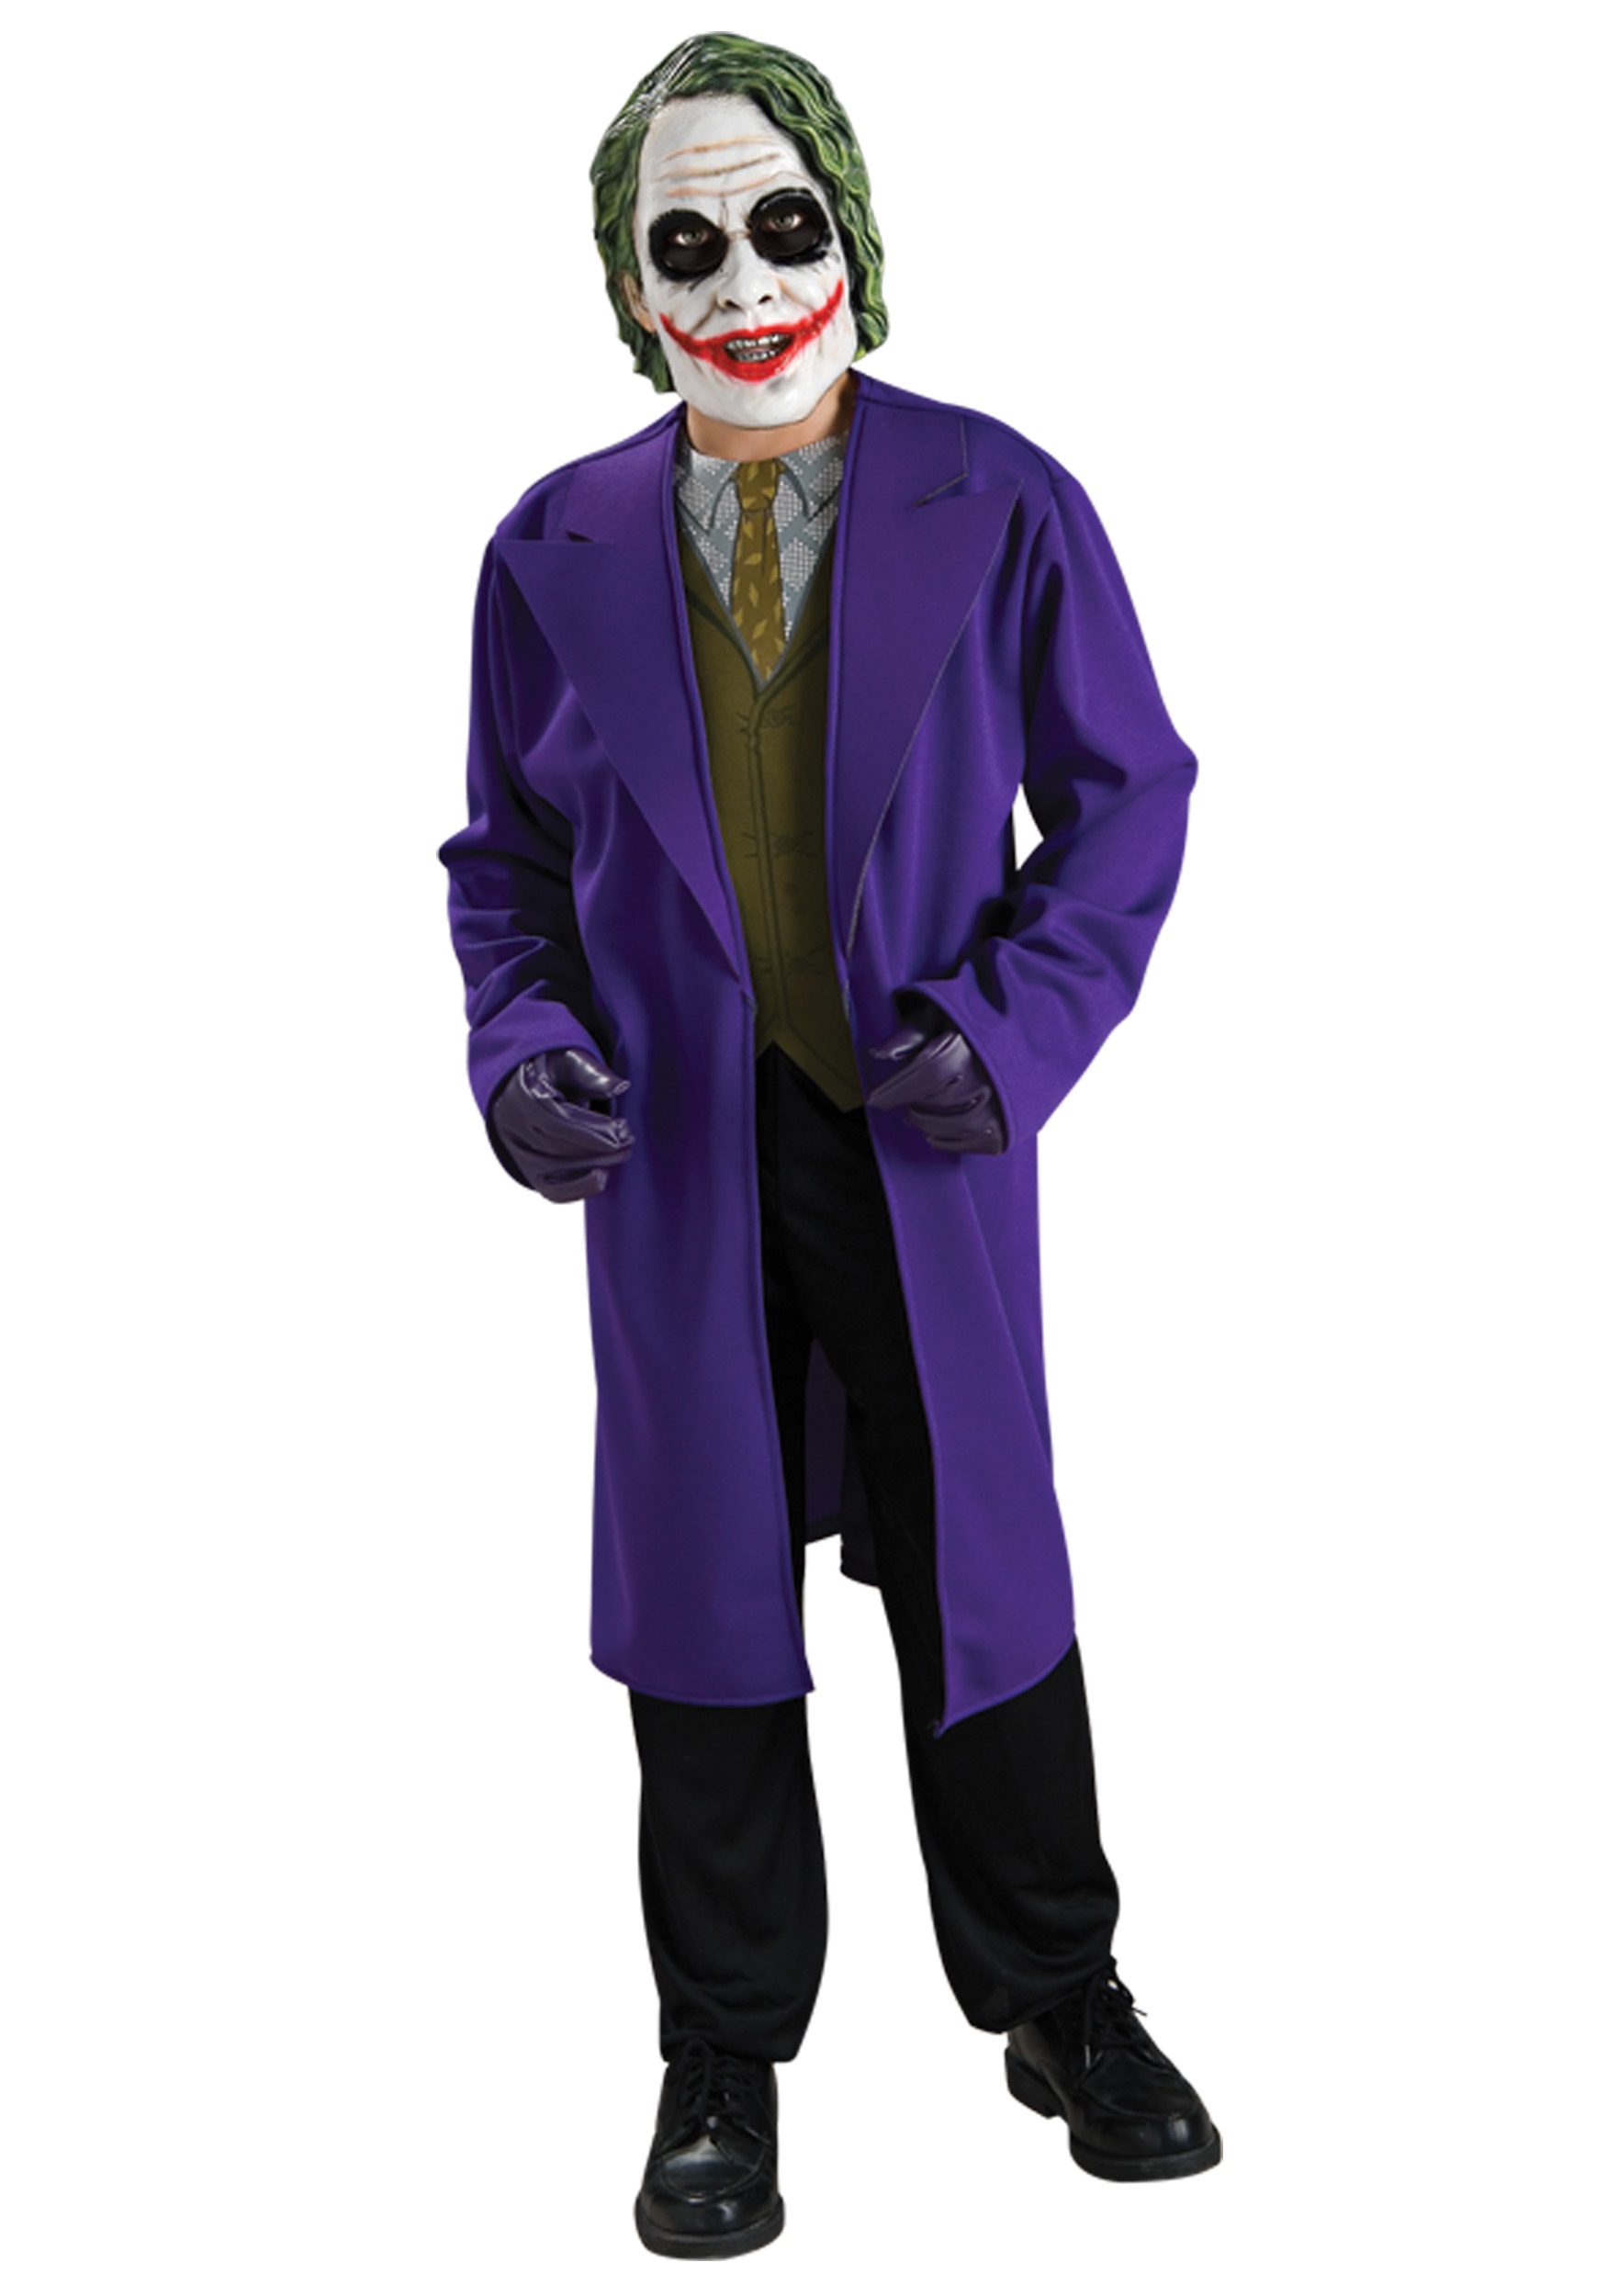 Джокер в костюме